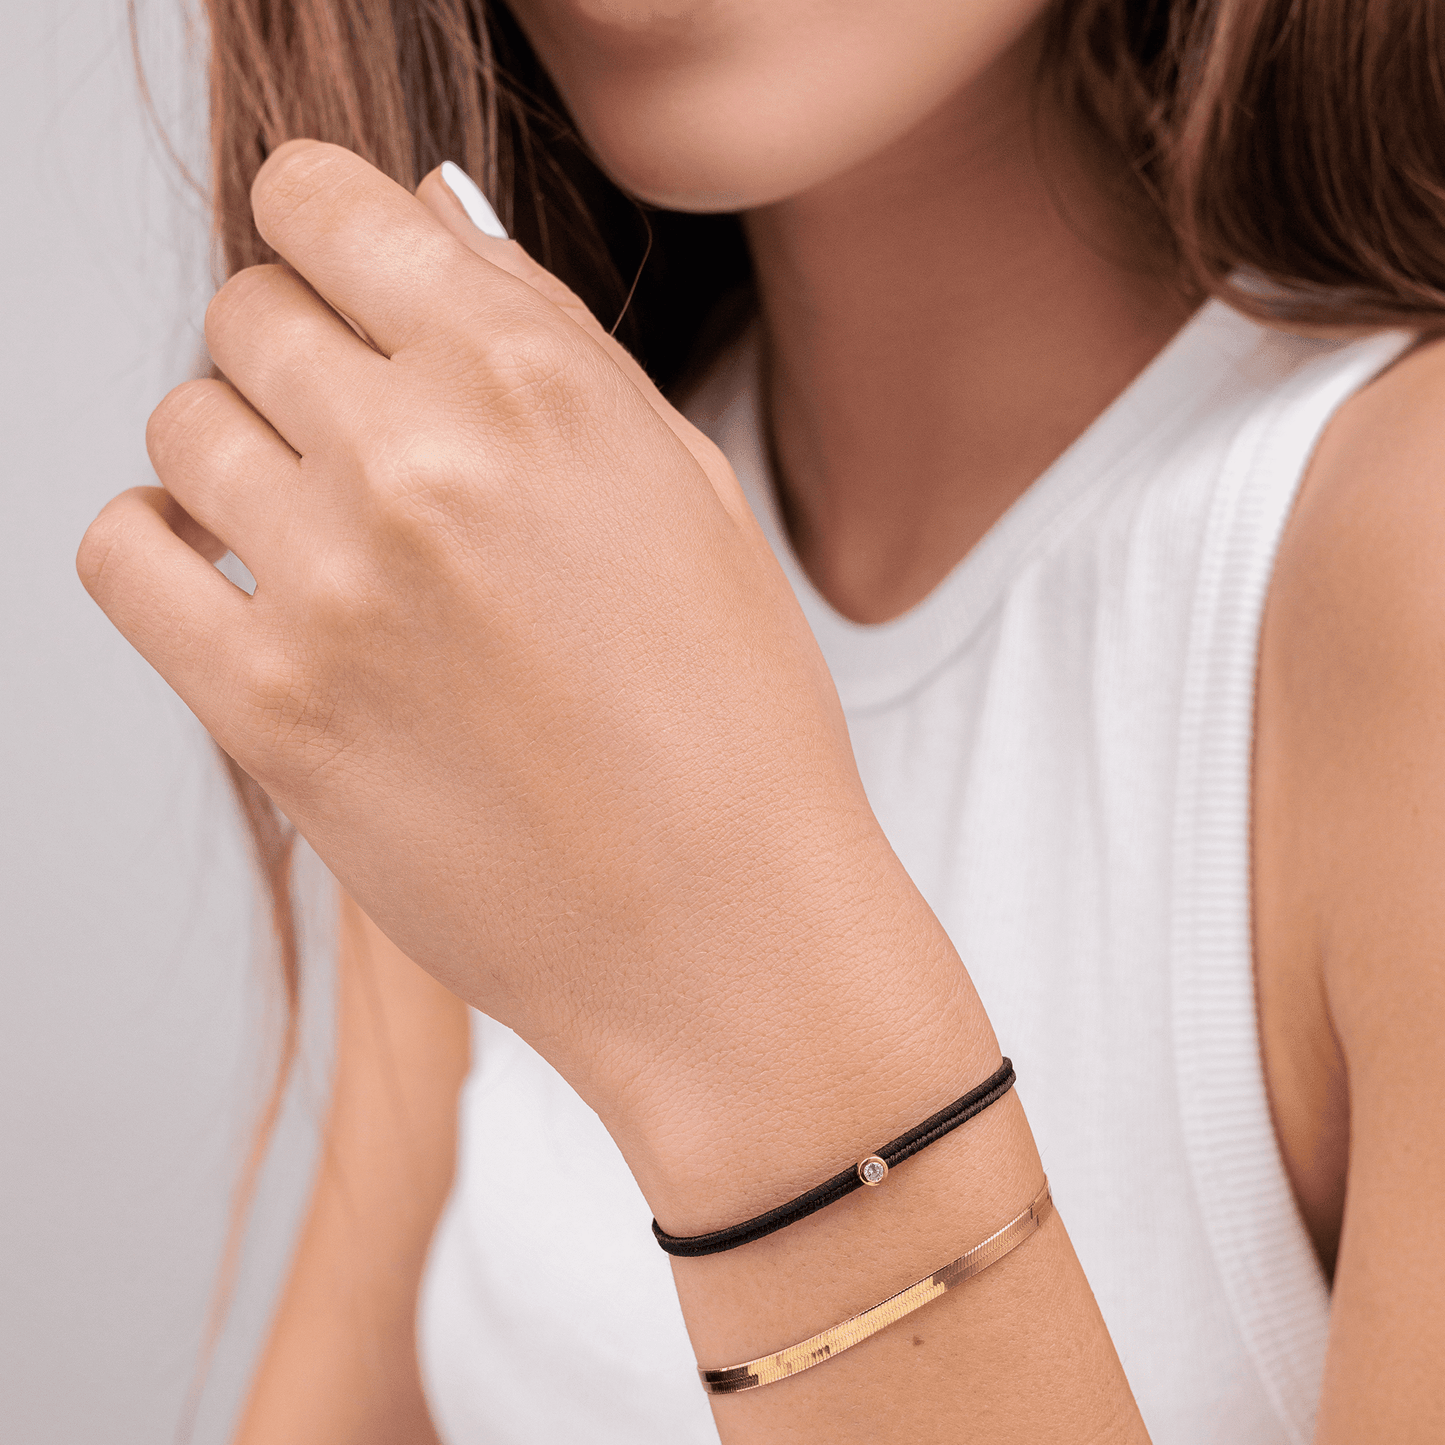 The Cord of Love - 18K Gold Vermeil Bracelets magal-dev 